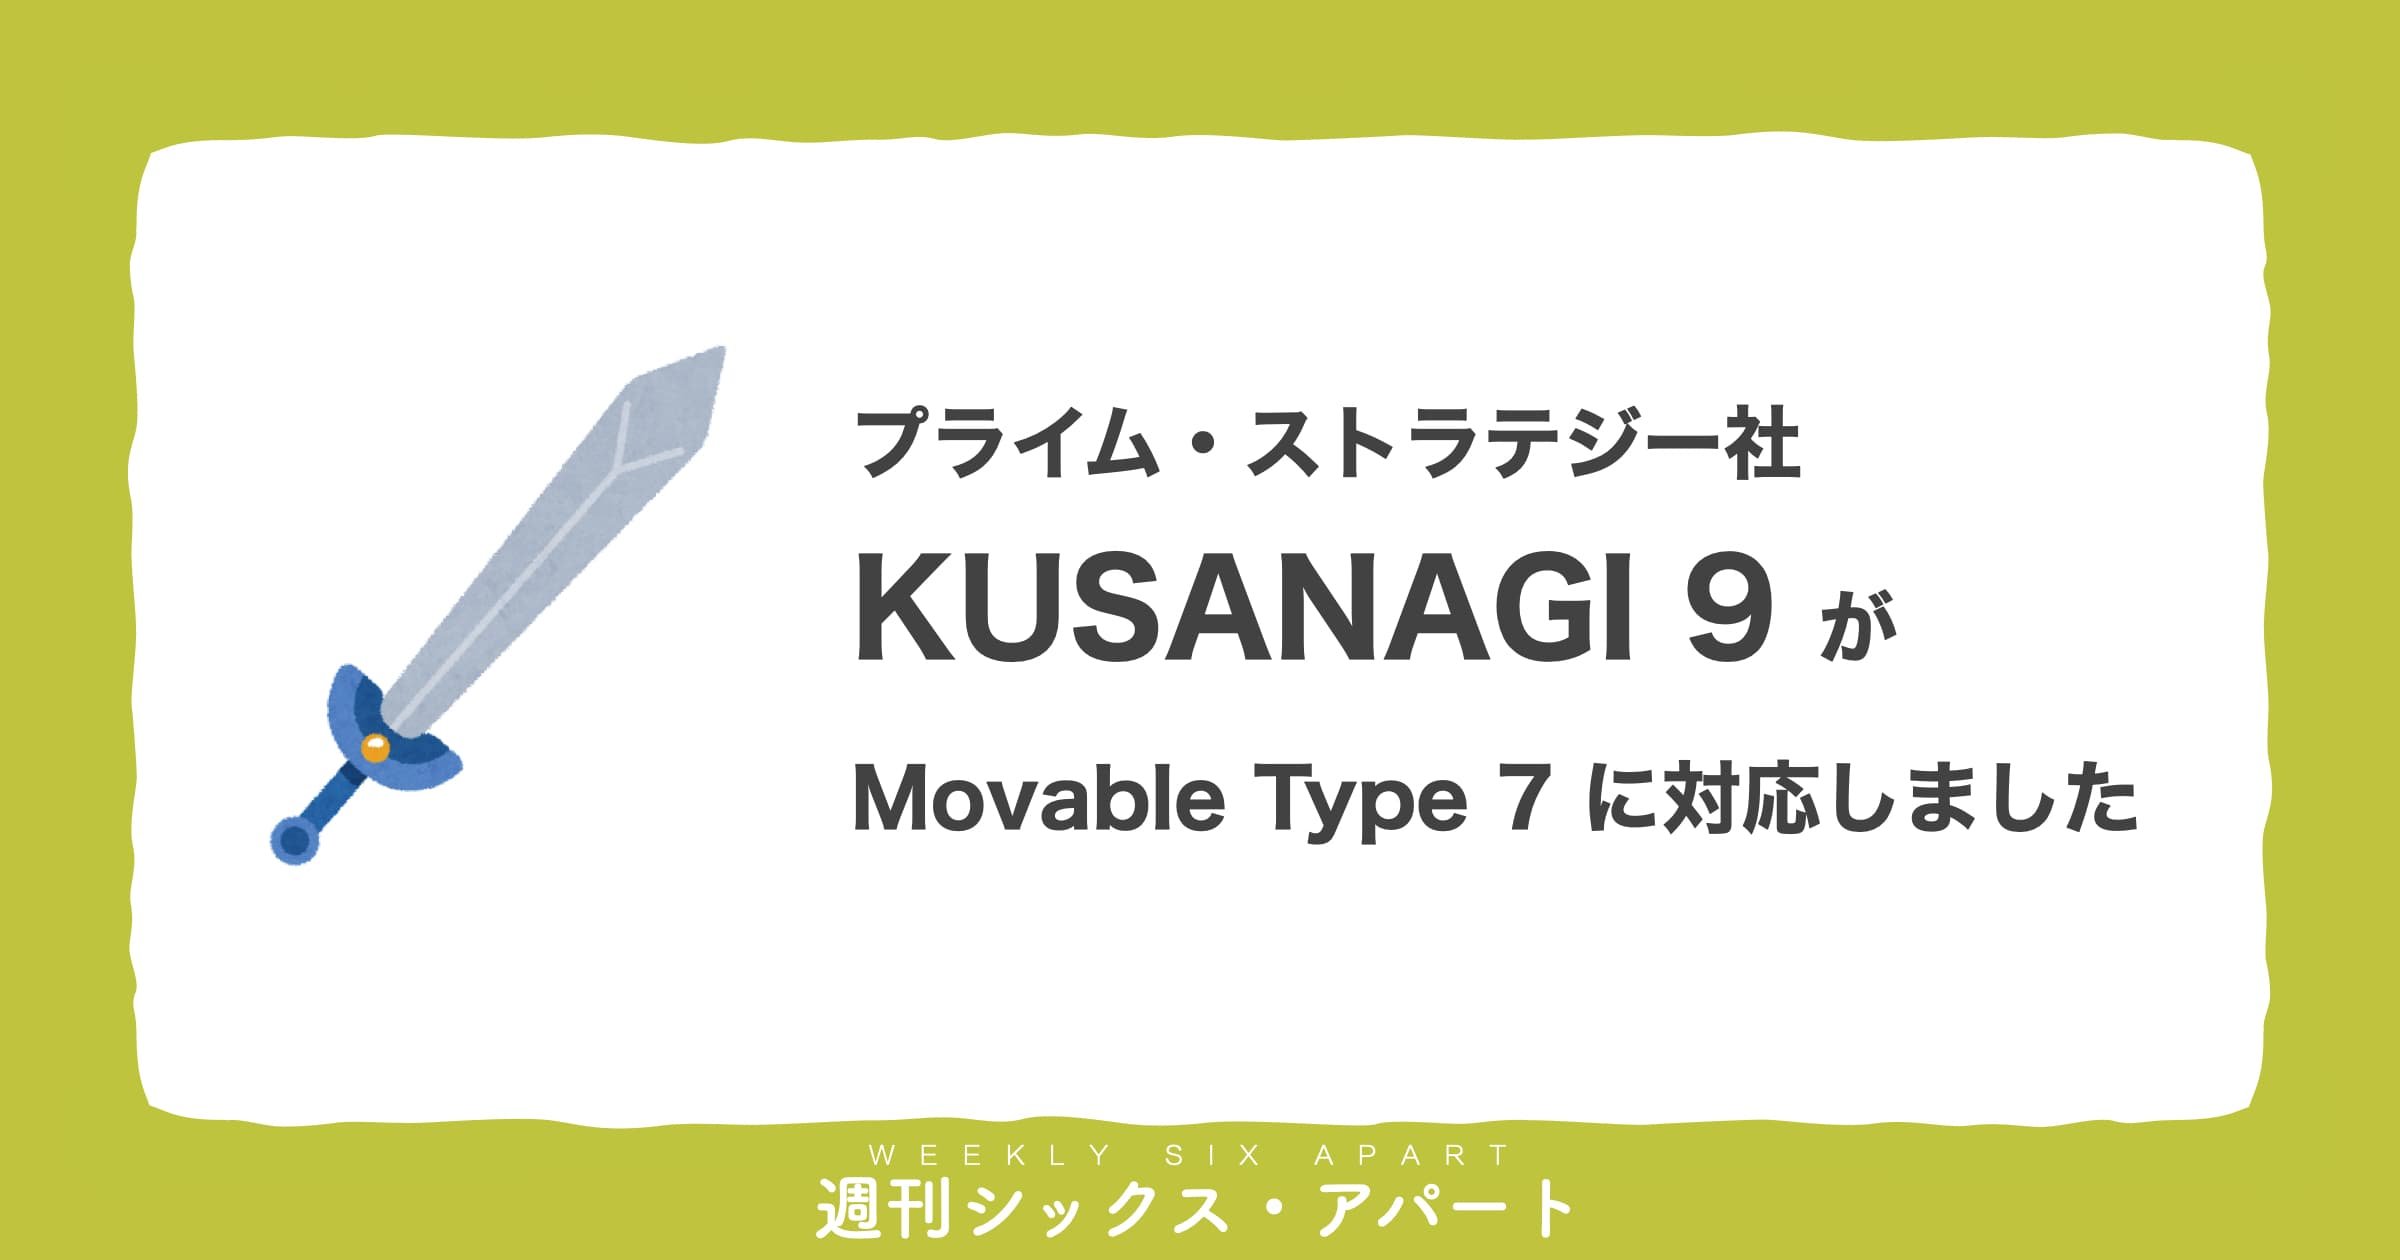 Movable Type 7 がプライム・ストラテジー社「KUSANAGI 9」で使いやすくなりました #週刊SA